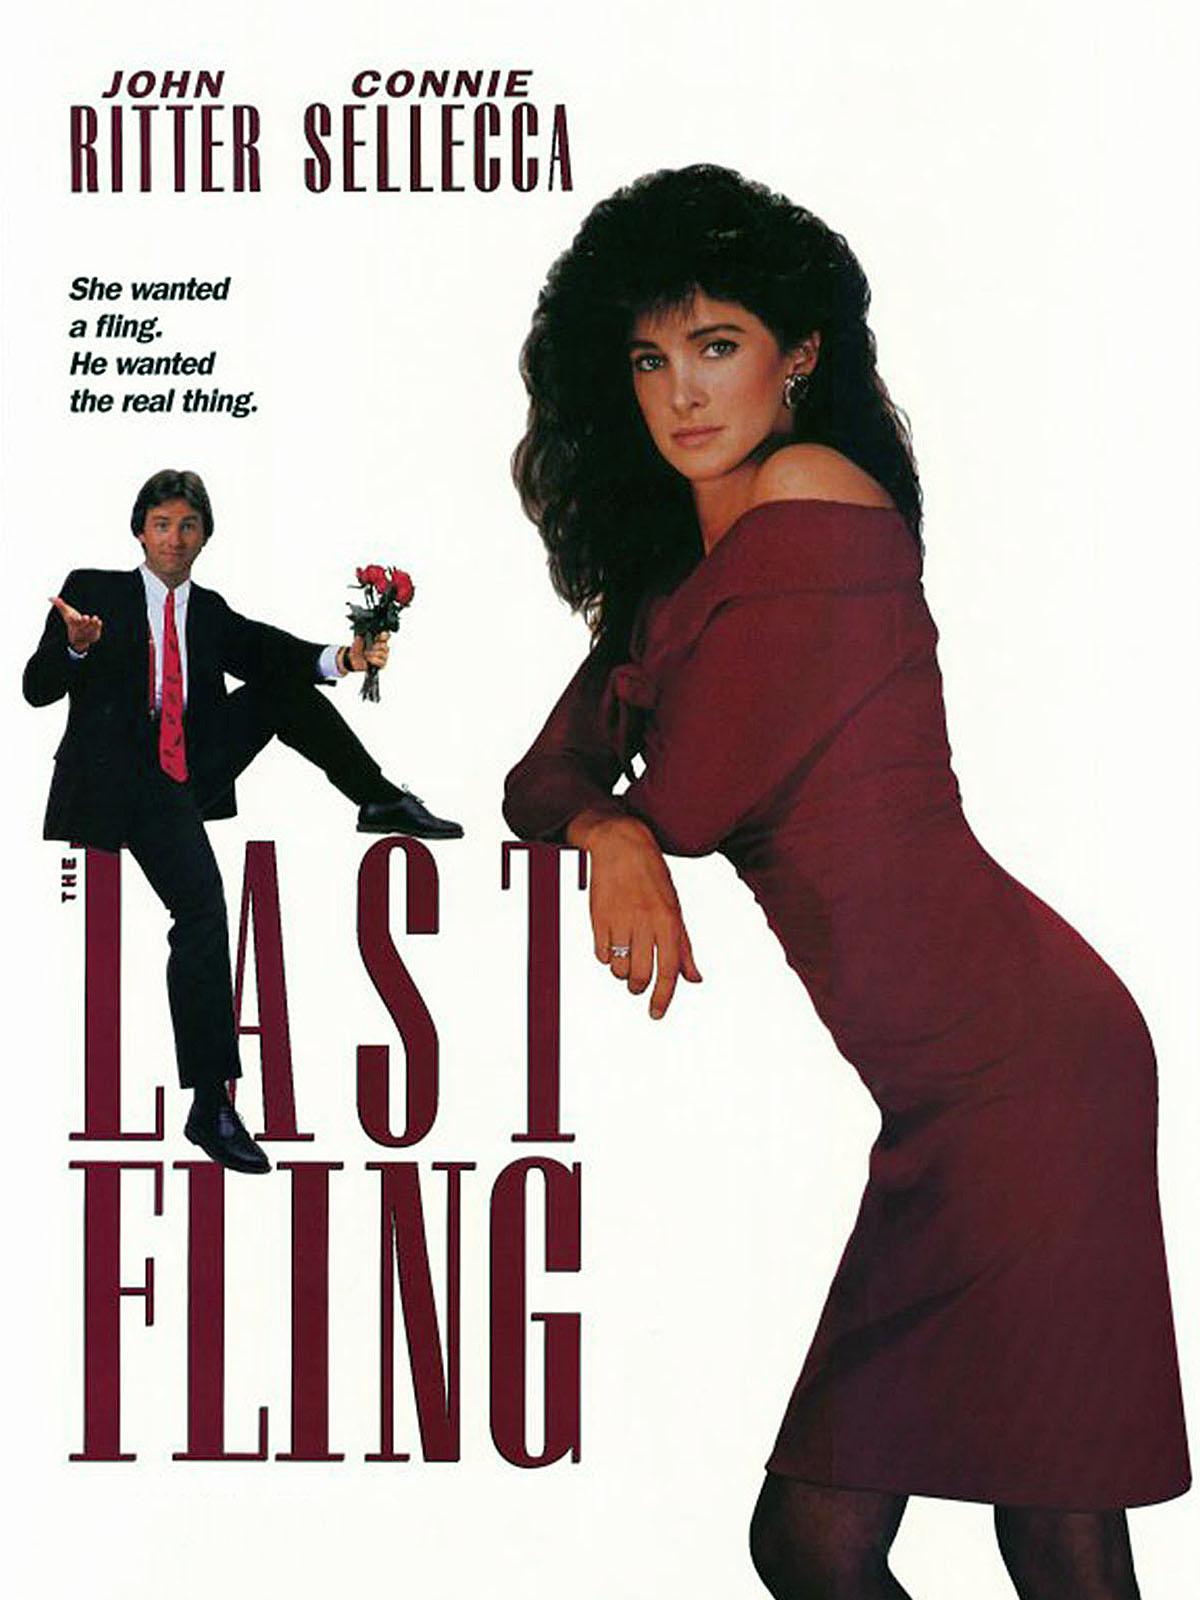 The Last Fling (1987) Screenshot 1